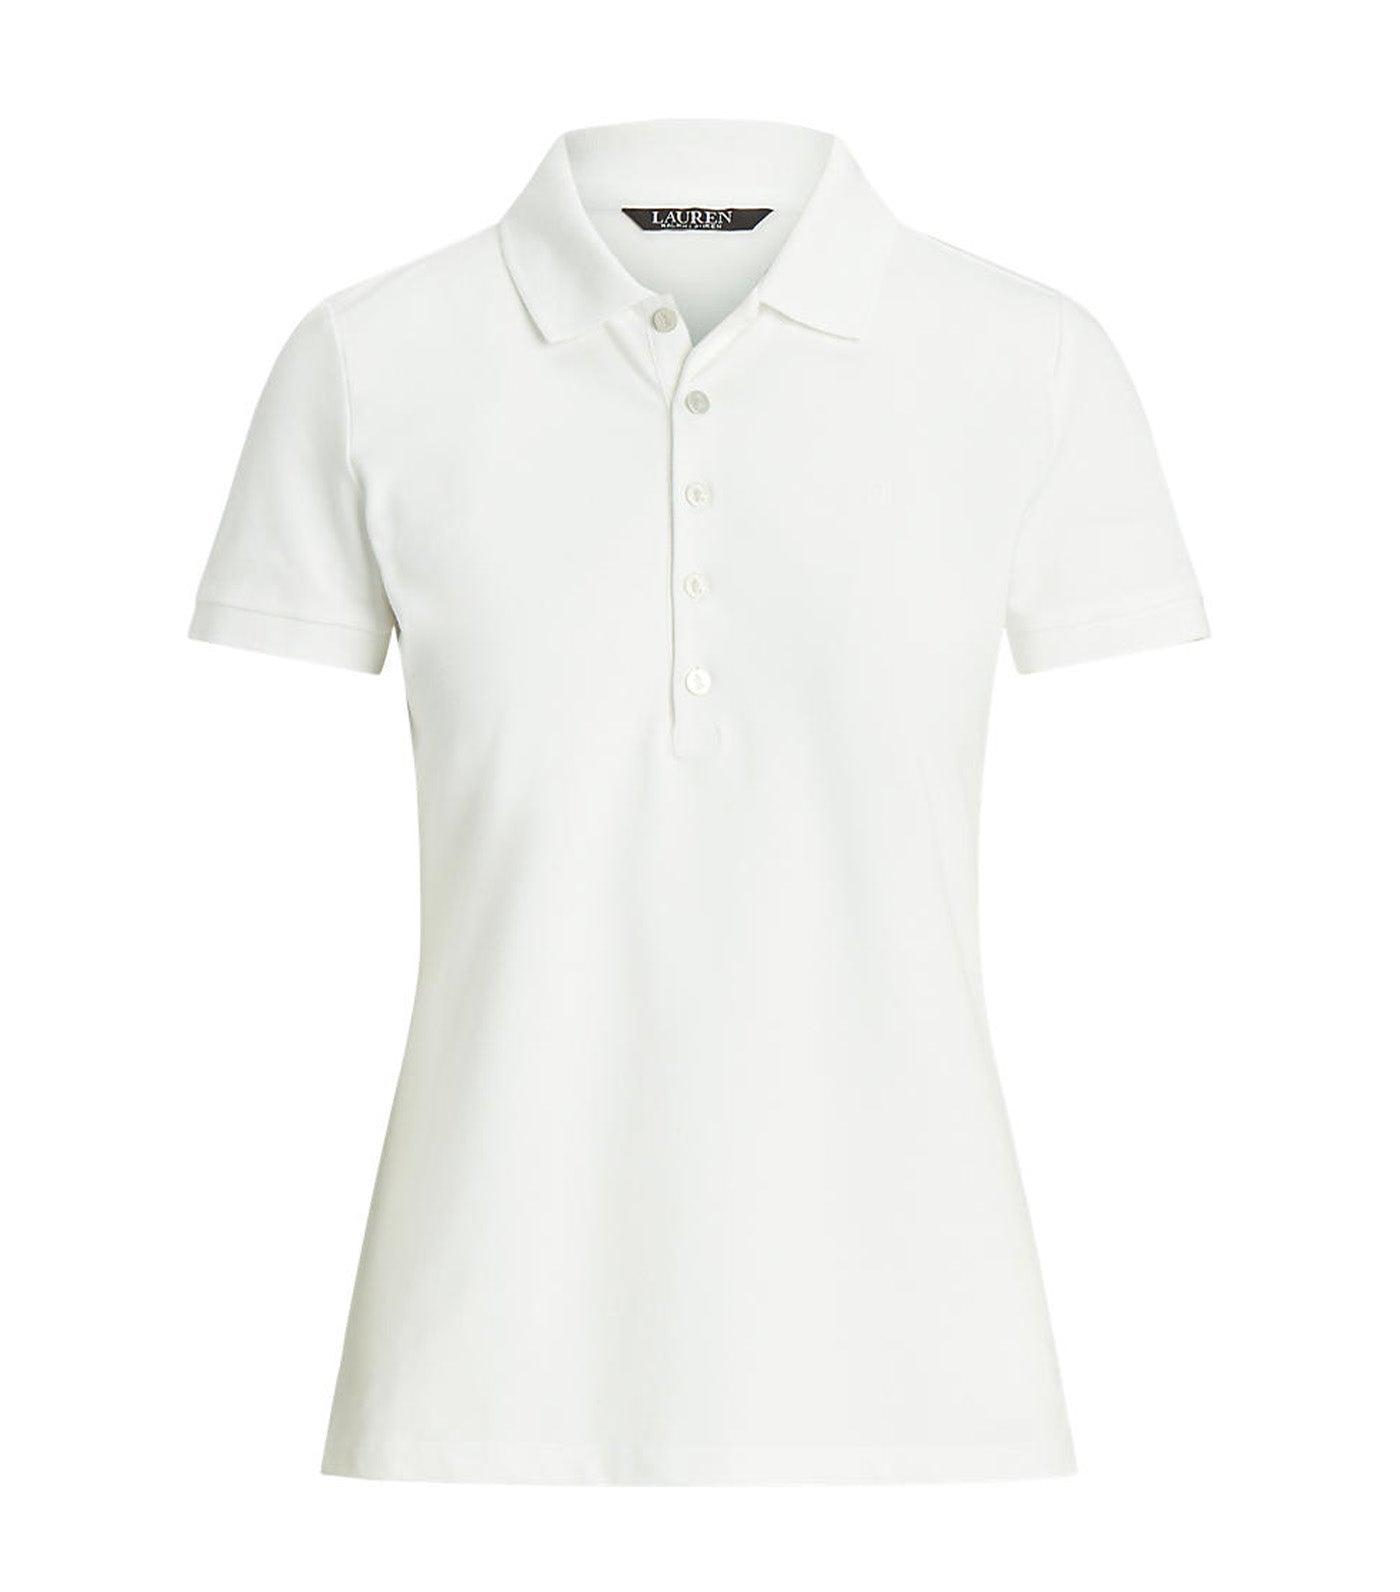 POLO RALPH LAUREN - Women's white Oxford piquet shirt 